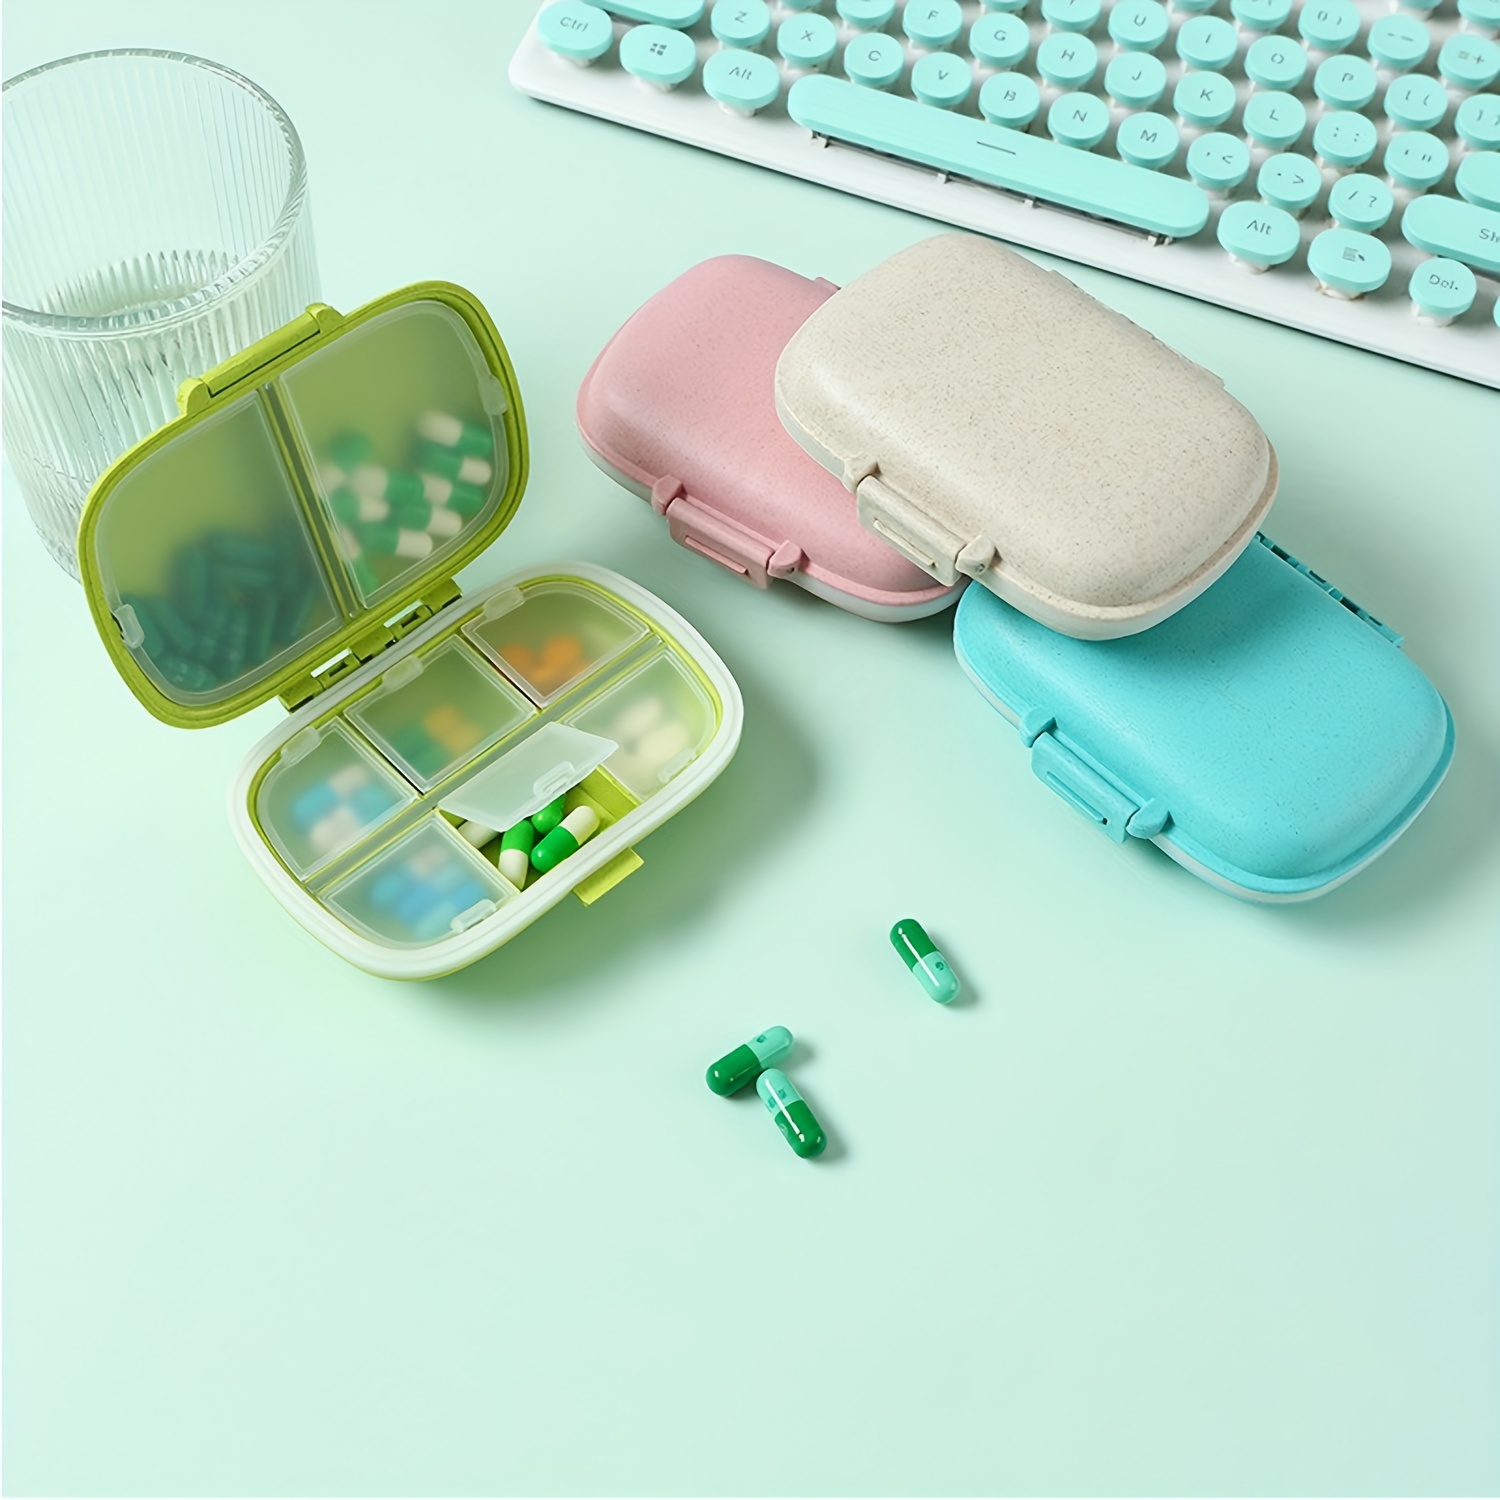 Small Pill Box 3 Pcs,Cute Travel Pill Case Portable for Pocket Purse